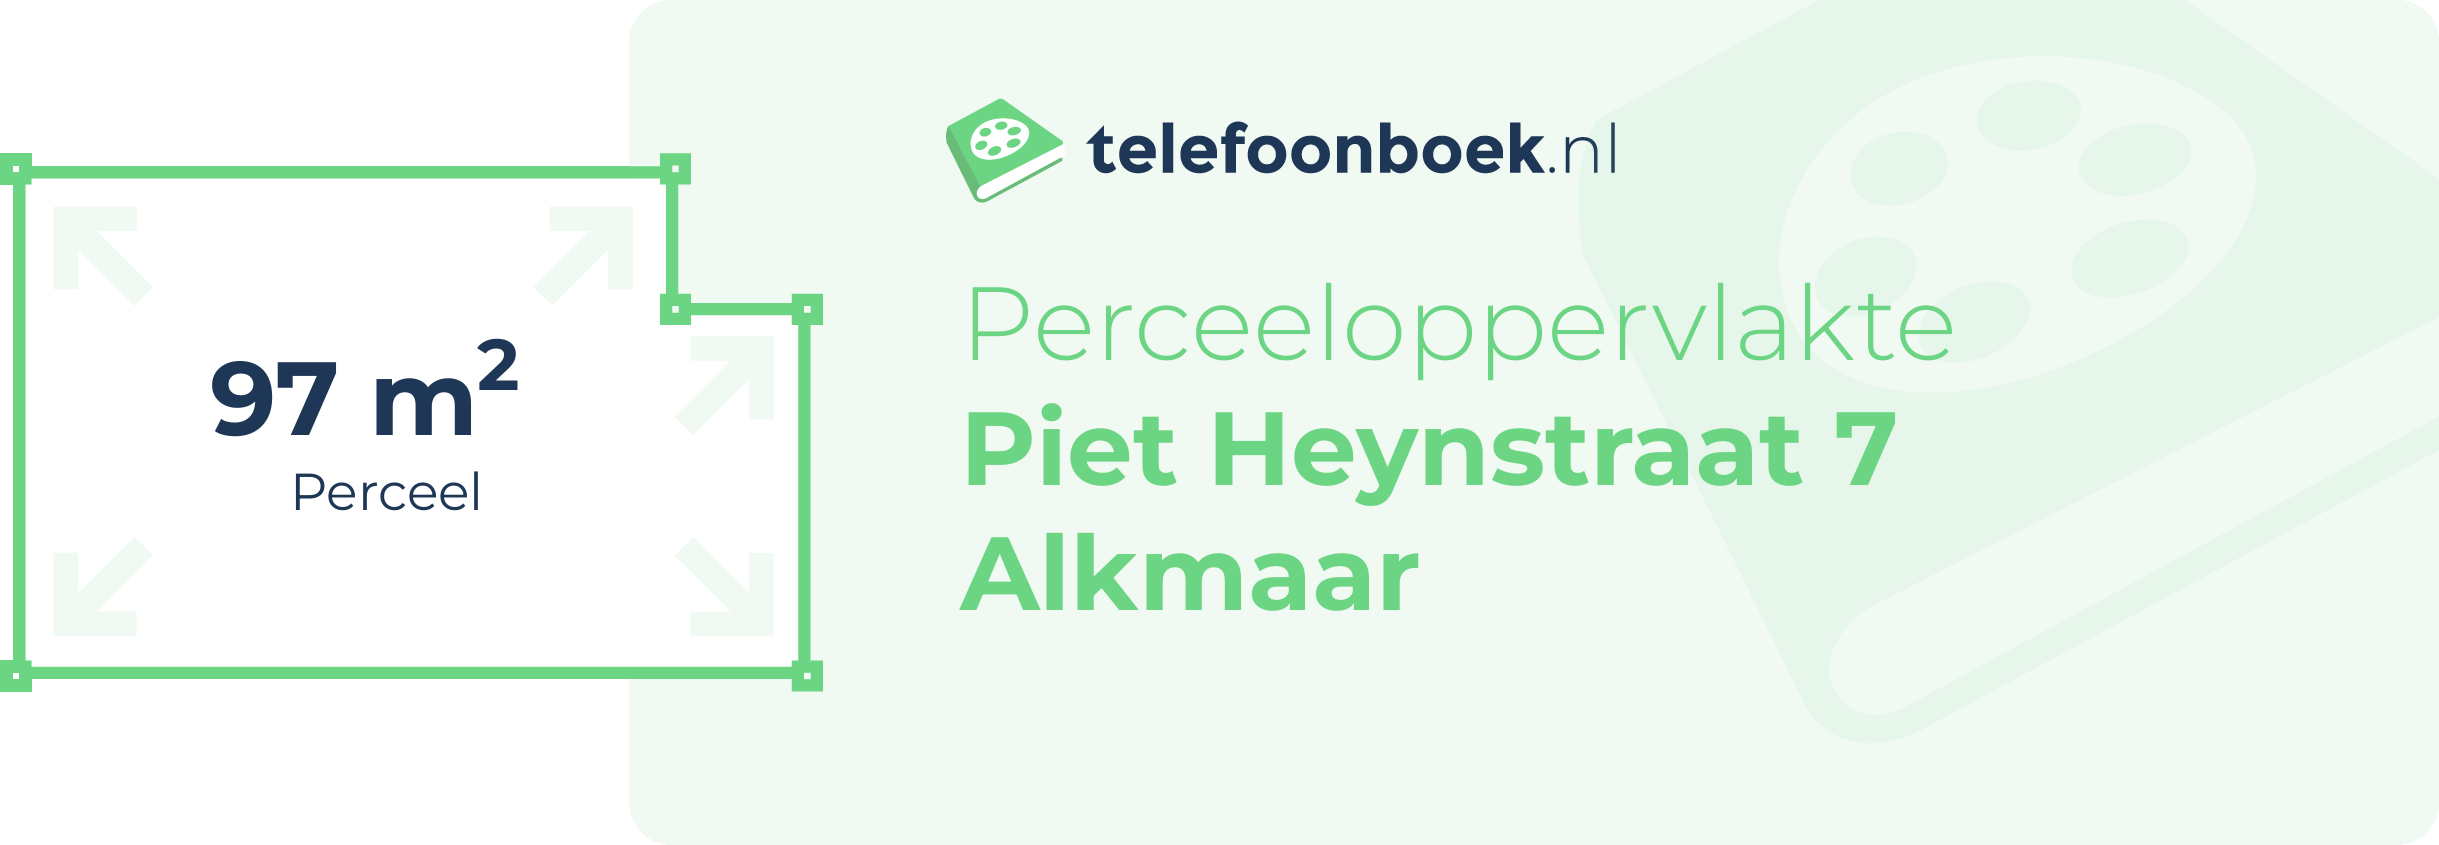 Perceeloppervlakte Piet Heynstraat 7 Alkmaar